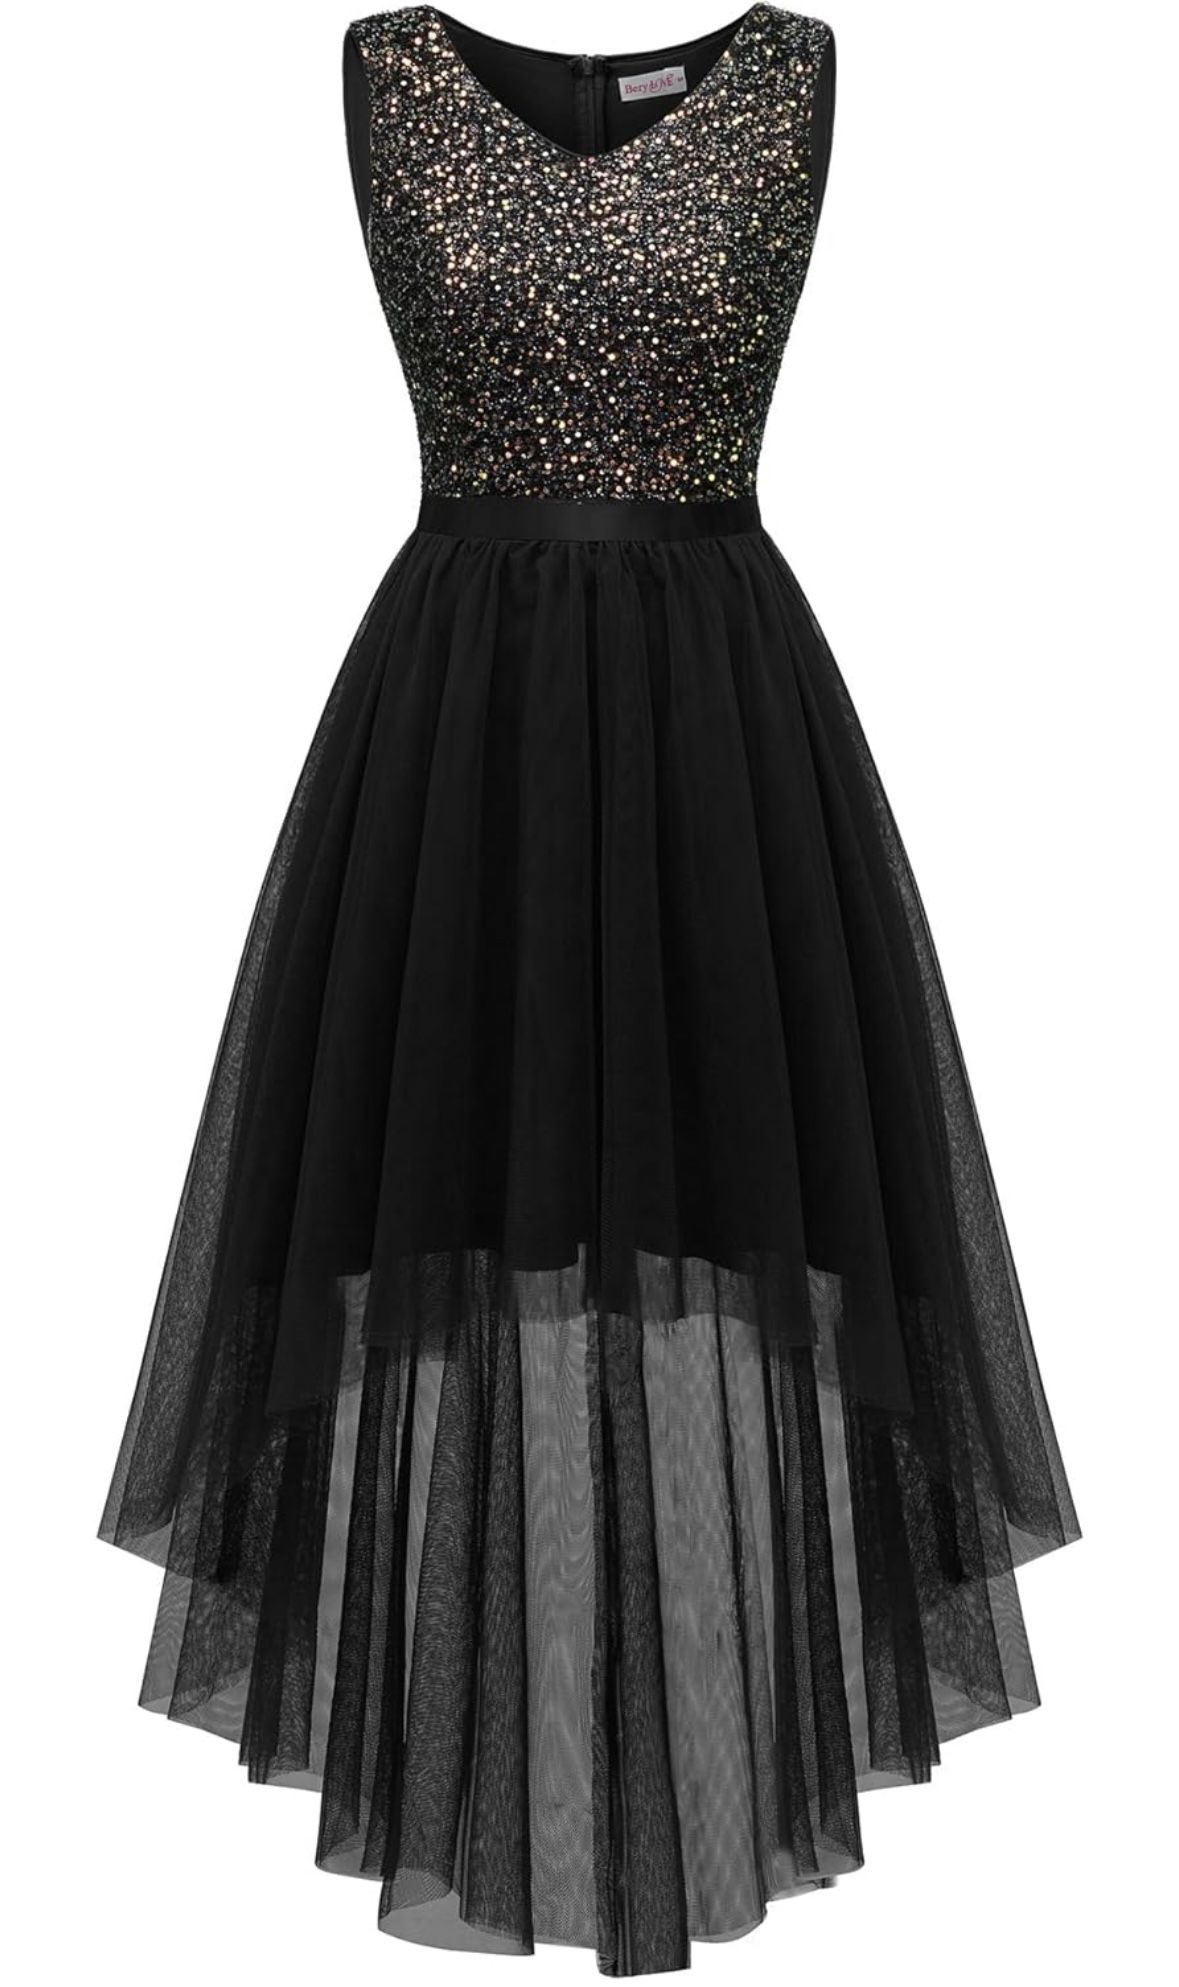 Sequin High Low Black Dress